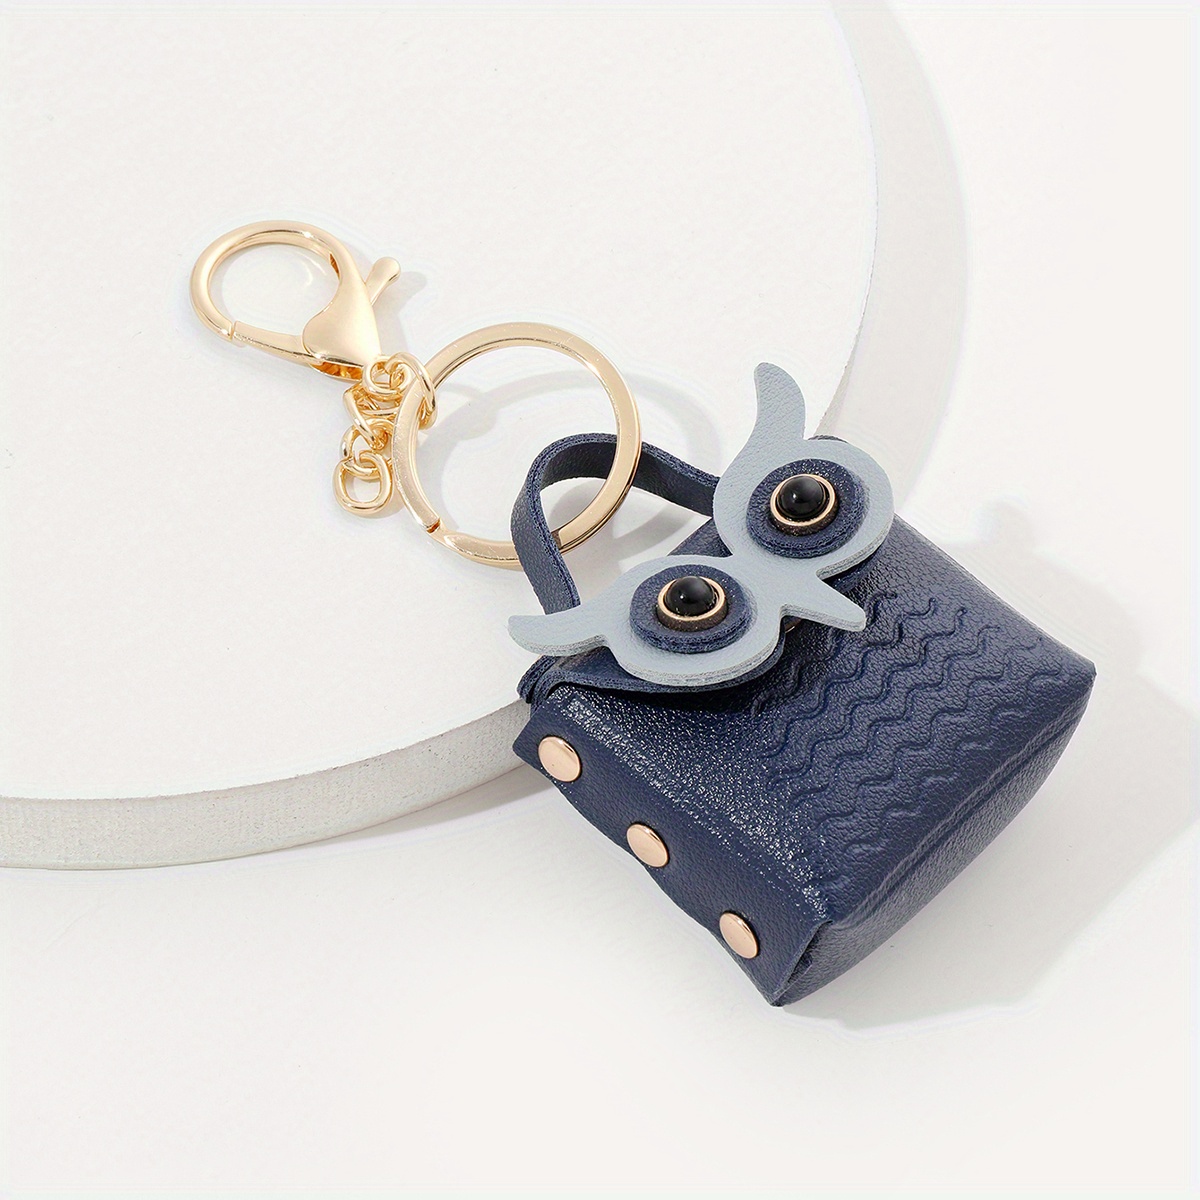 6pcs PVC Owl Keychain Cute Cartoon Animal Bag Key Chain Keyring Ornament  Bag Purse Charm Accessories